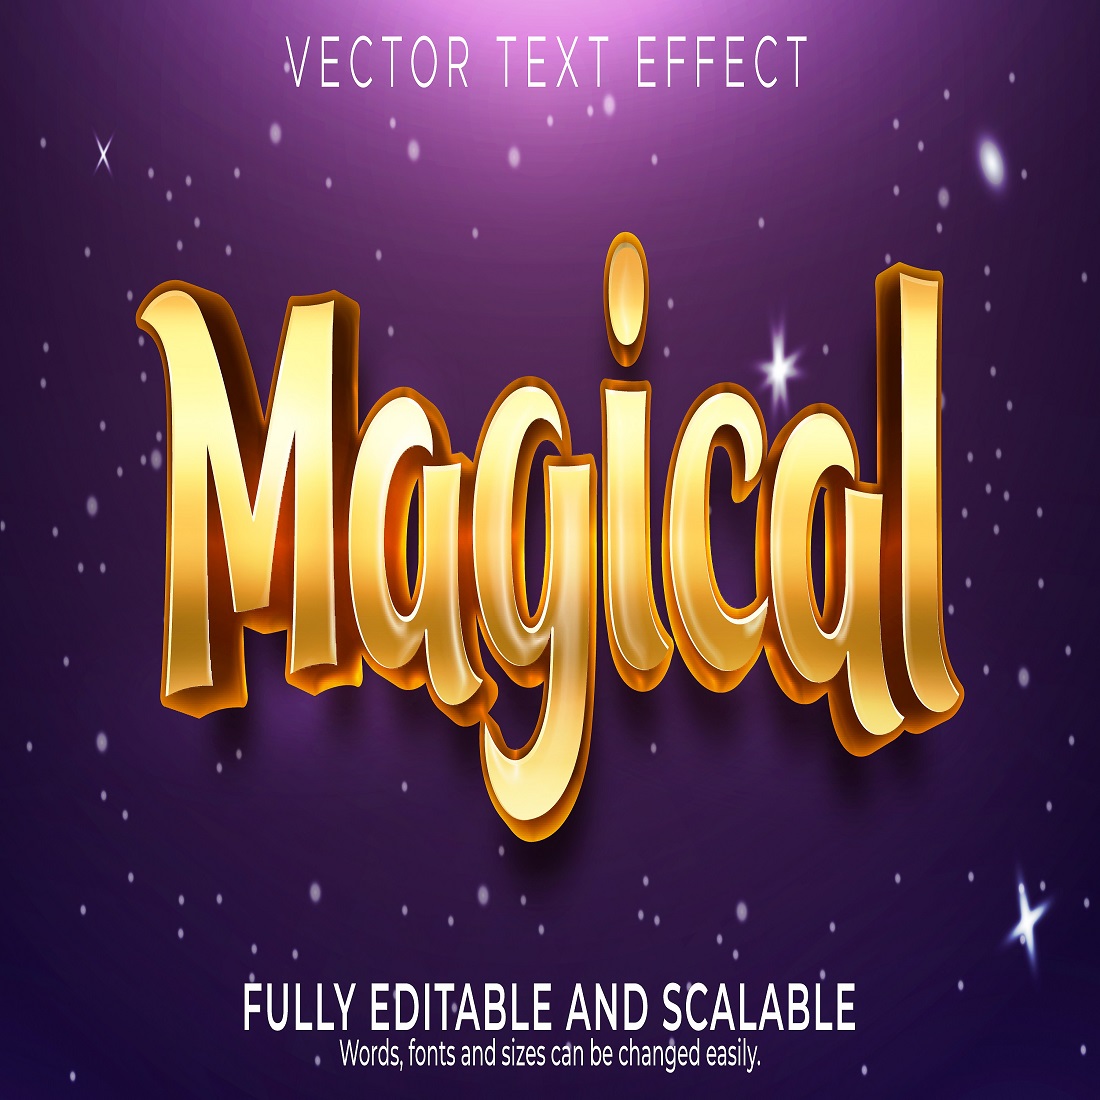 magical golden text effect editable fairy tale text style 293